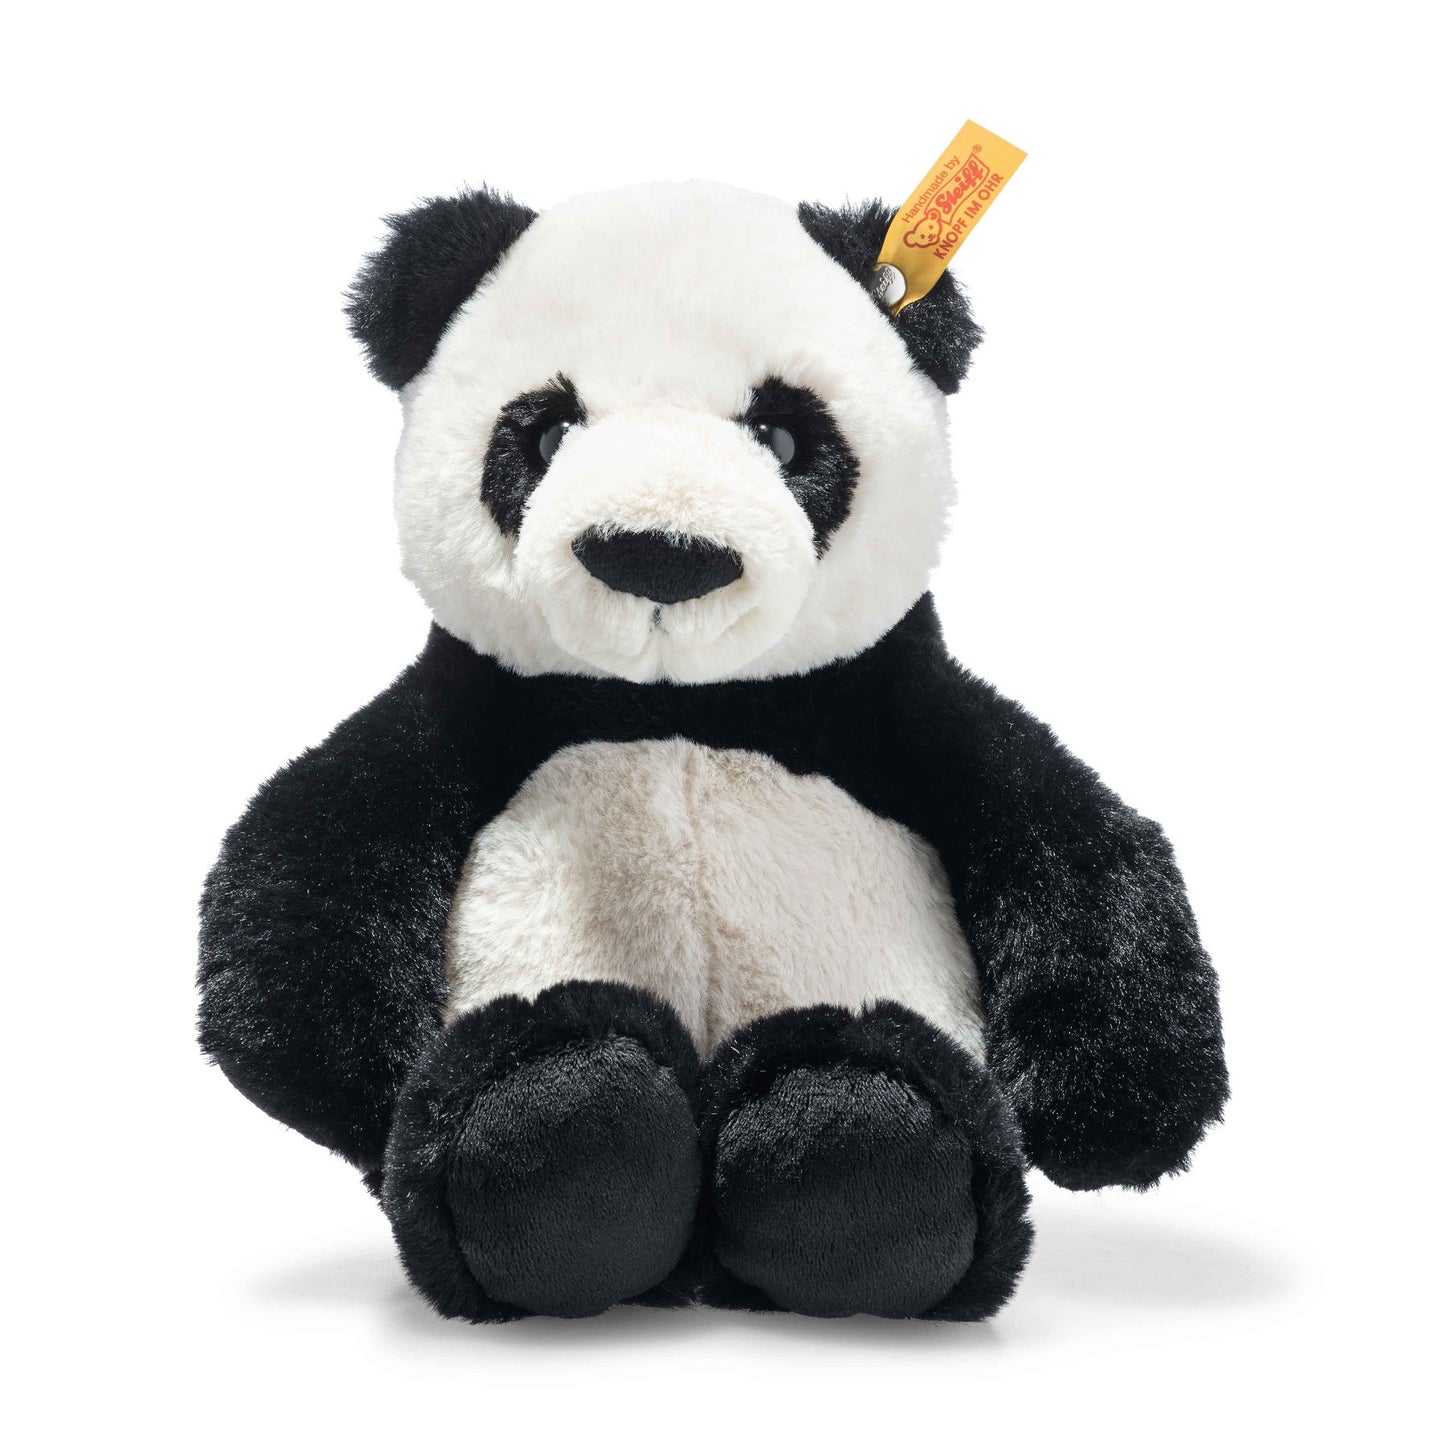 Steiff Ming Panda